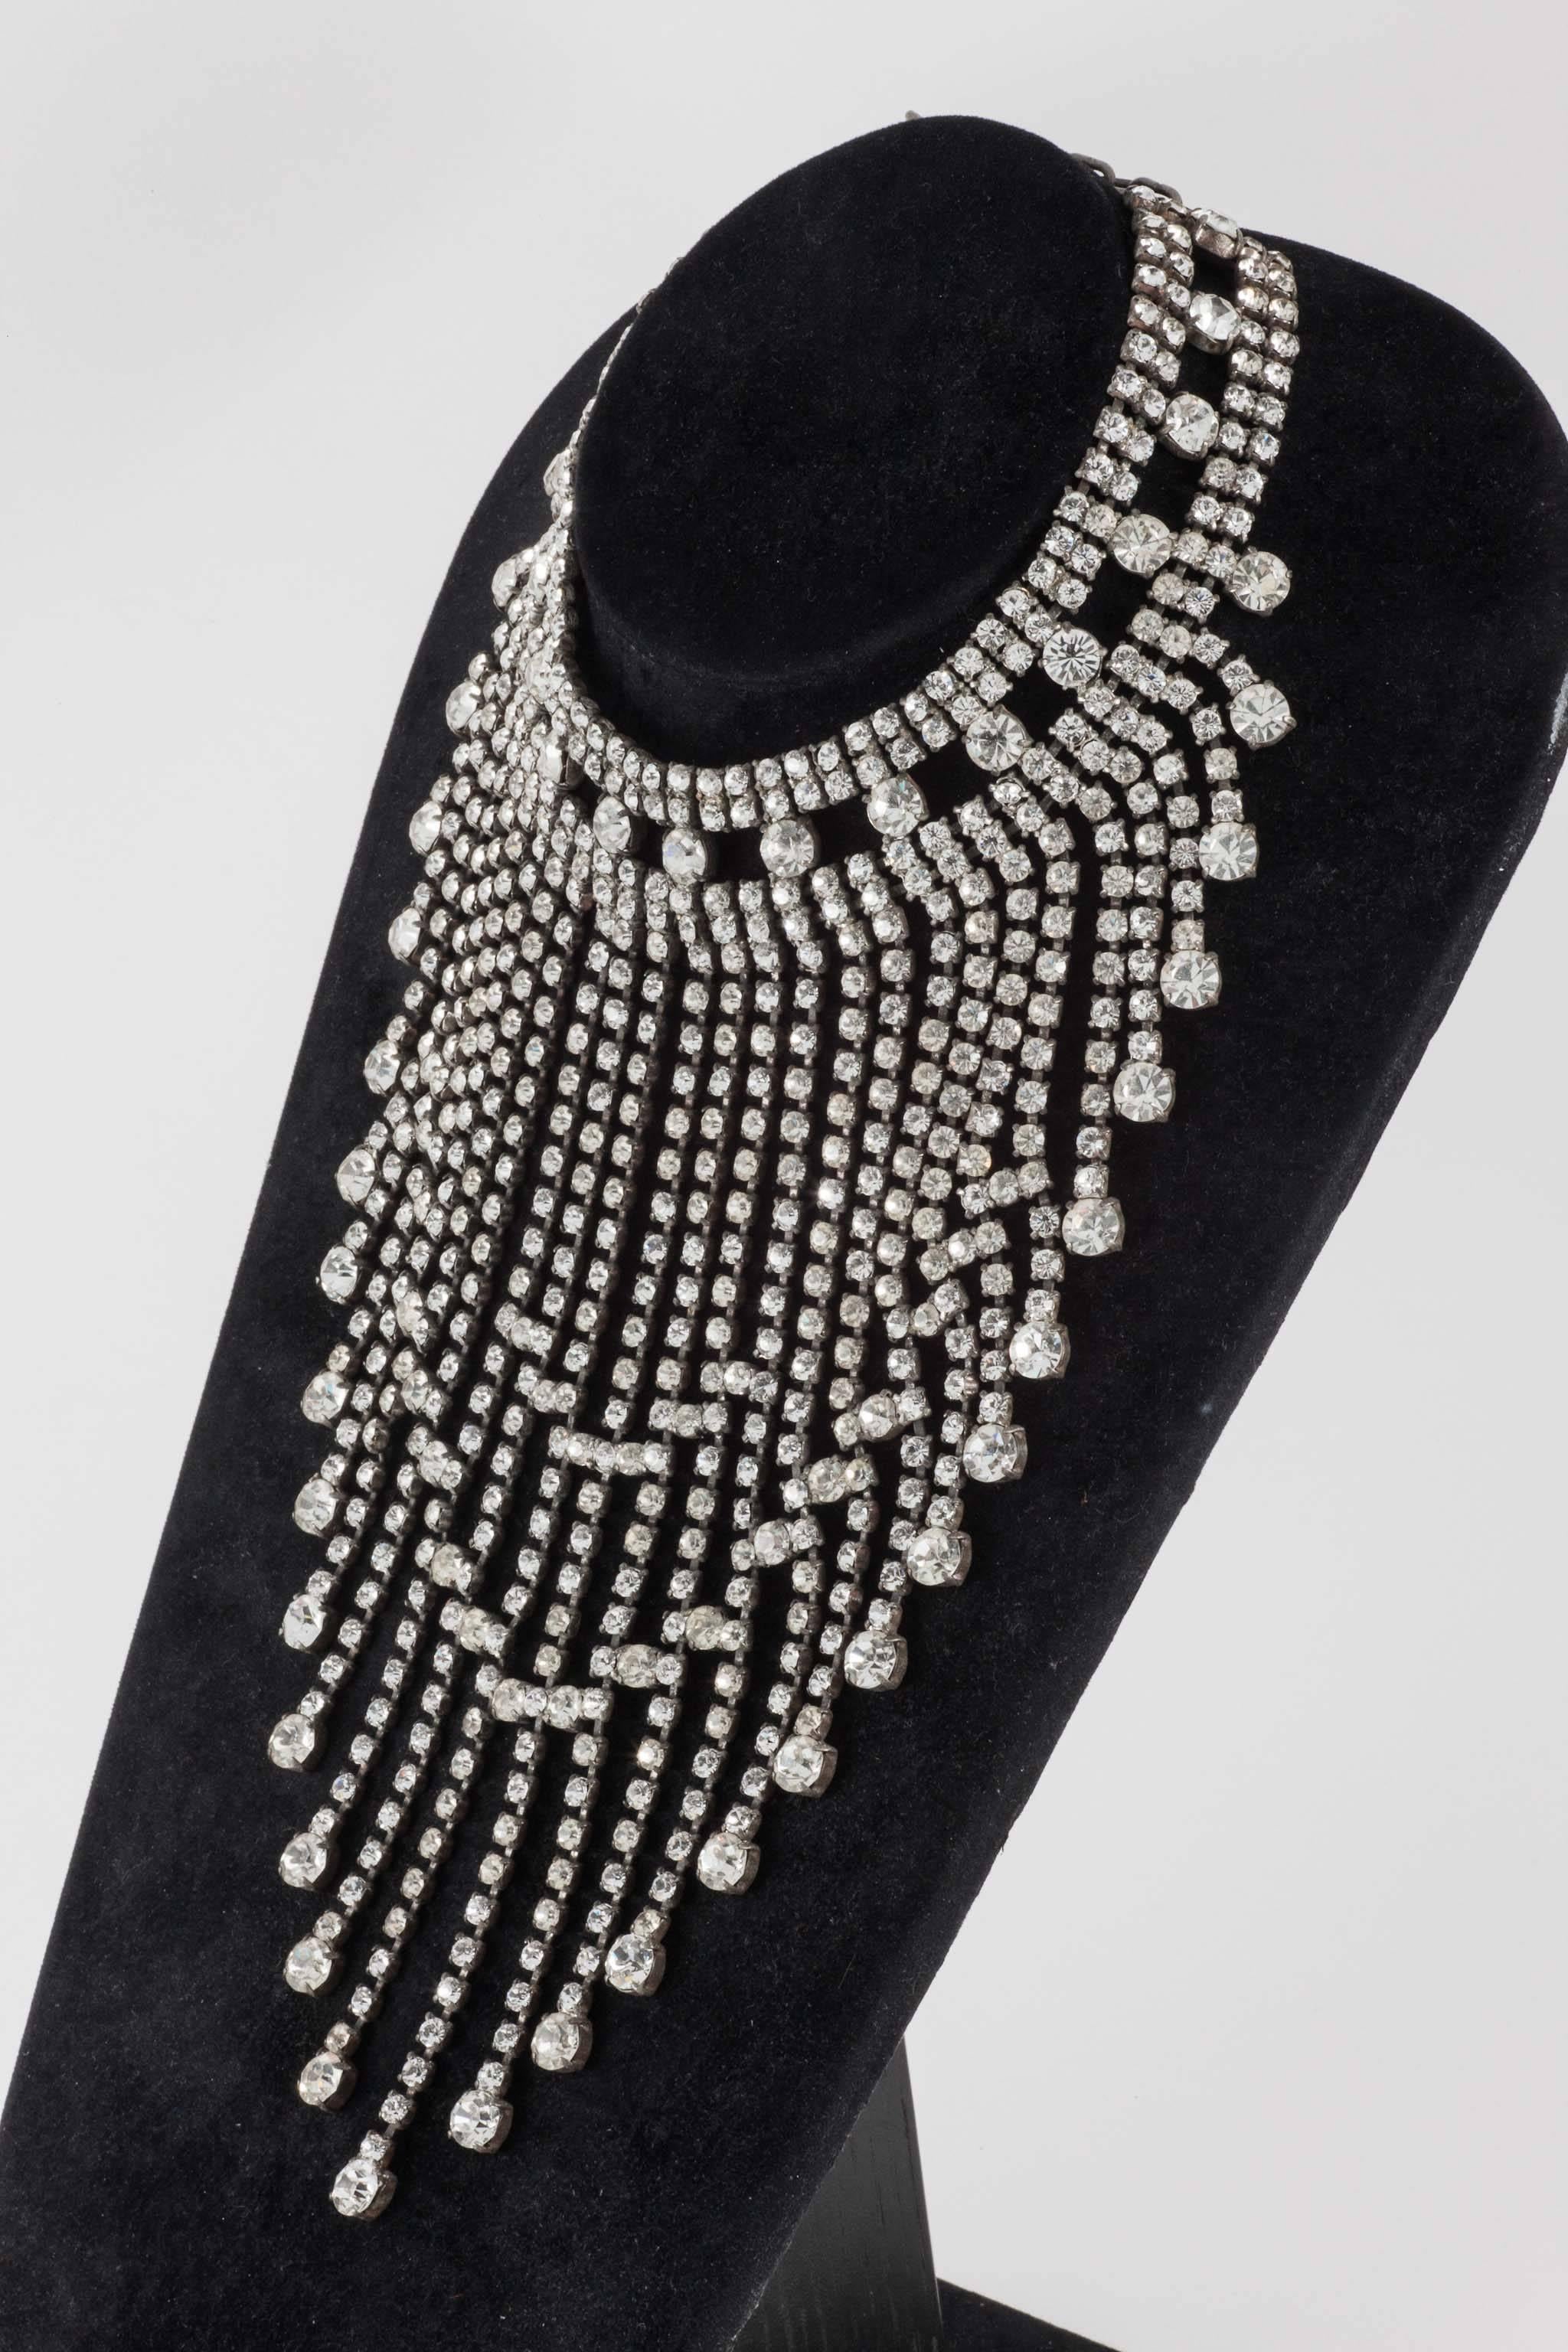 Women's 1950s Showgirl necklace. Wonderful, original and huge. 